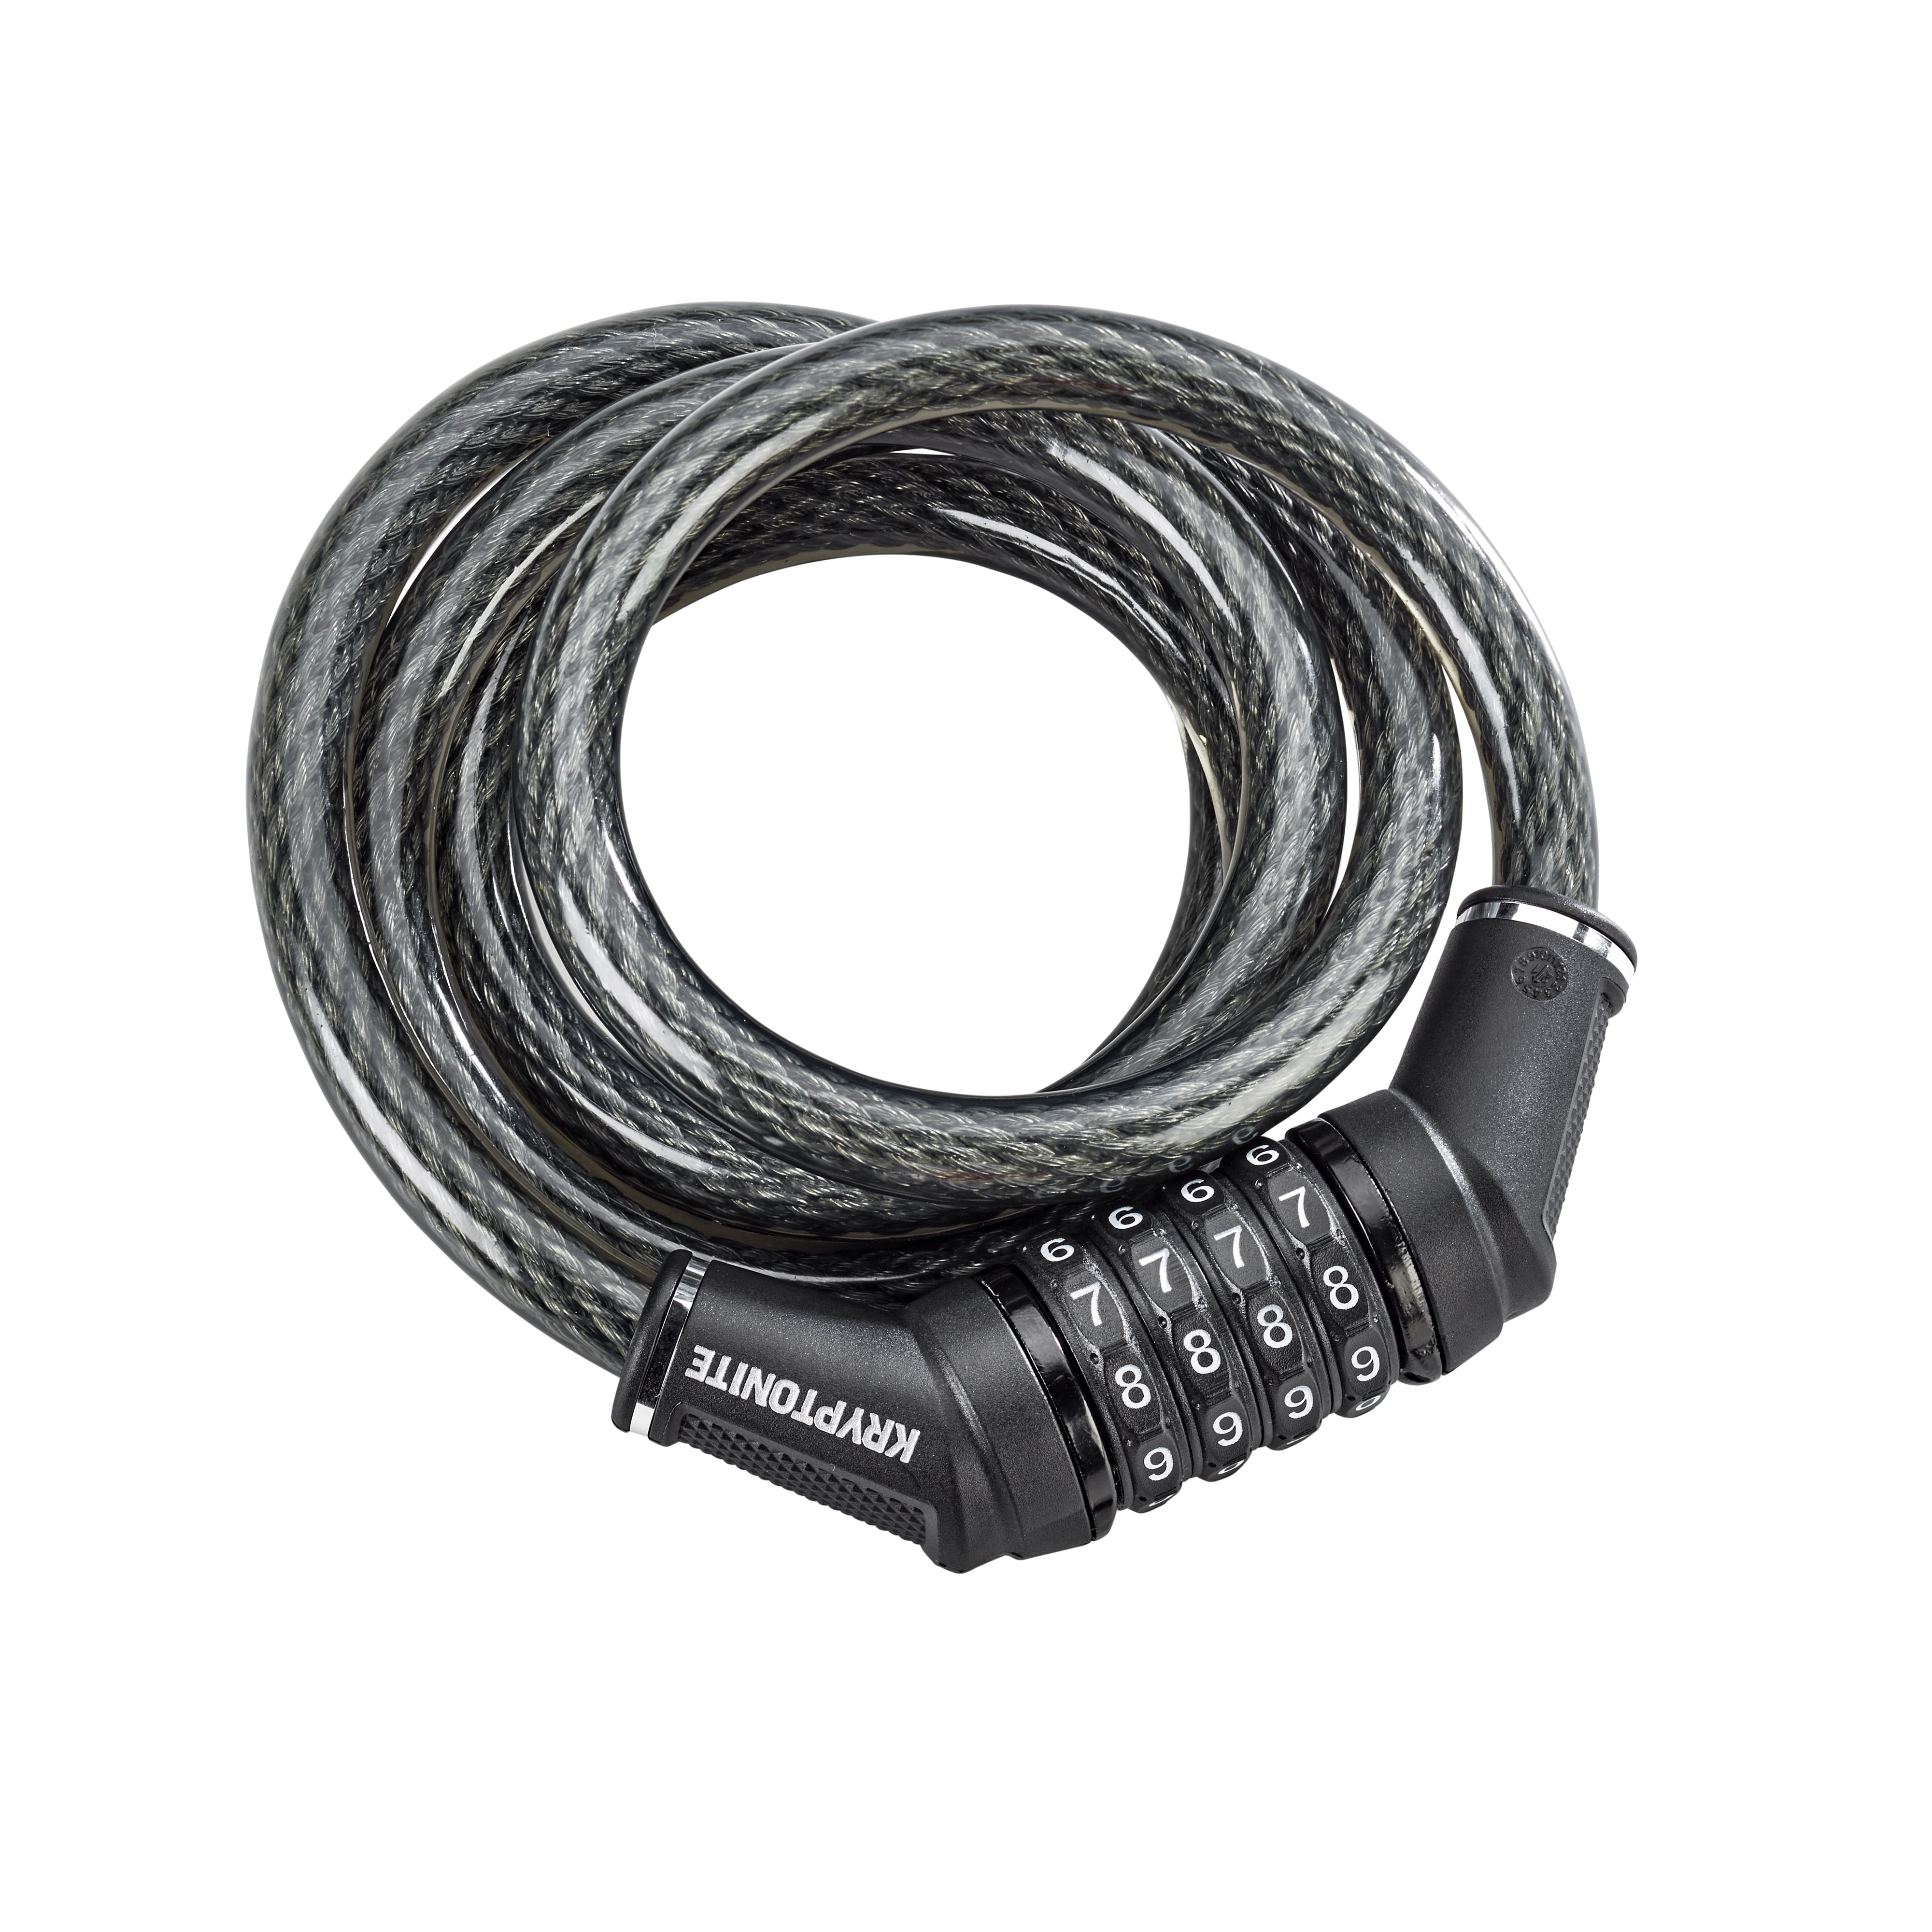 Lock Kryptonite Cable Kryptoflex 815 Combo 5foot X 8mm for sale online 